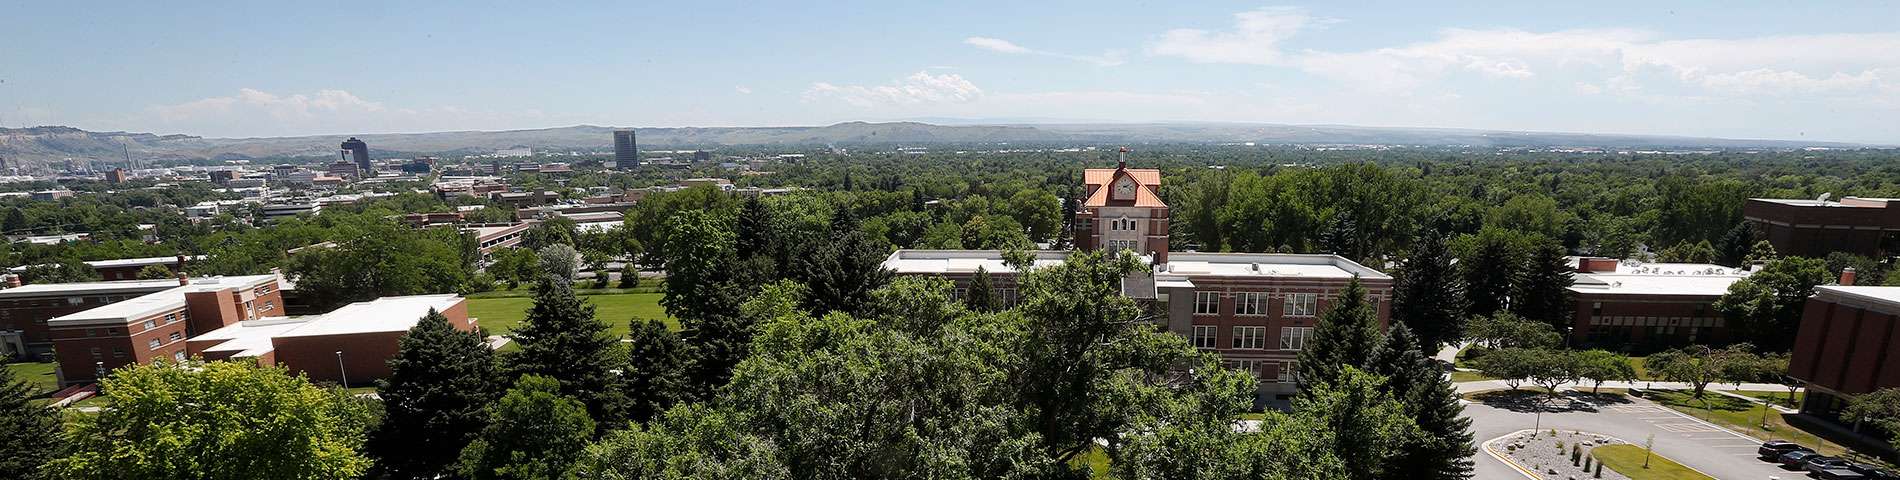 Long aerial shot of campus